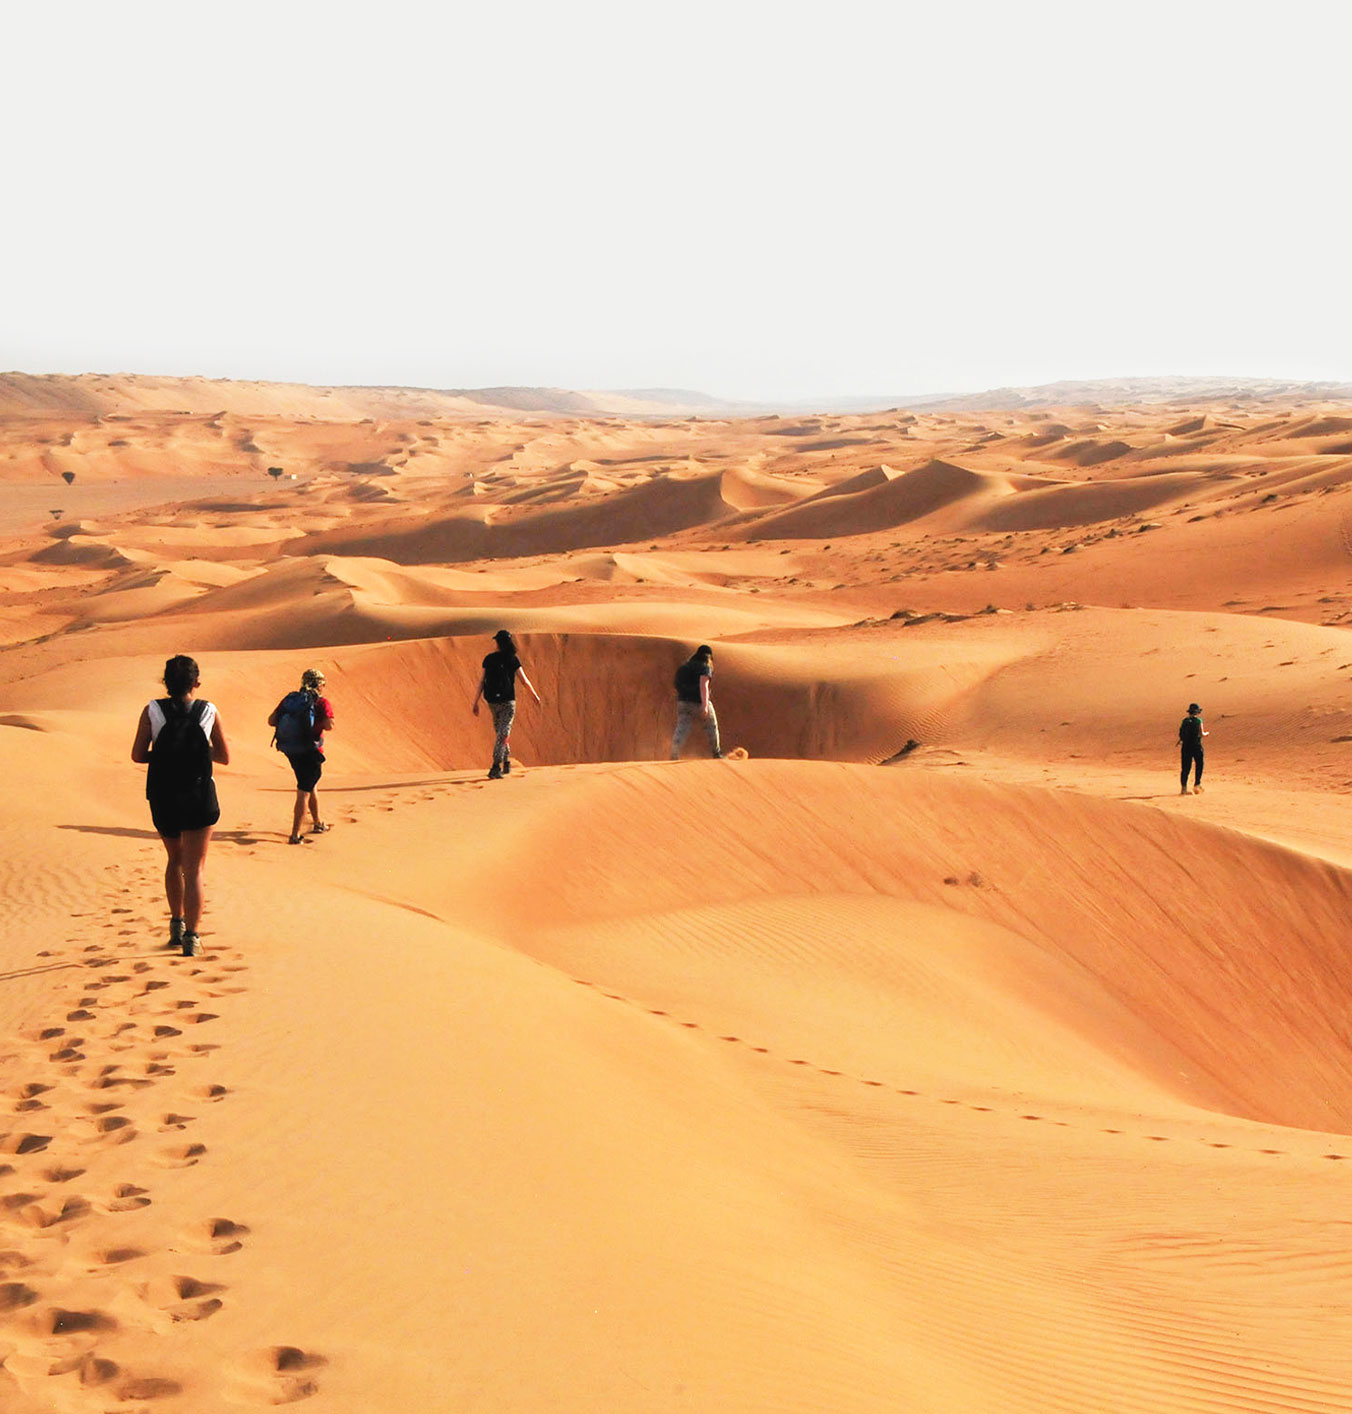 Explore the wild frontiers of Oman